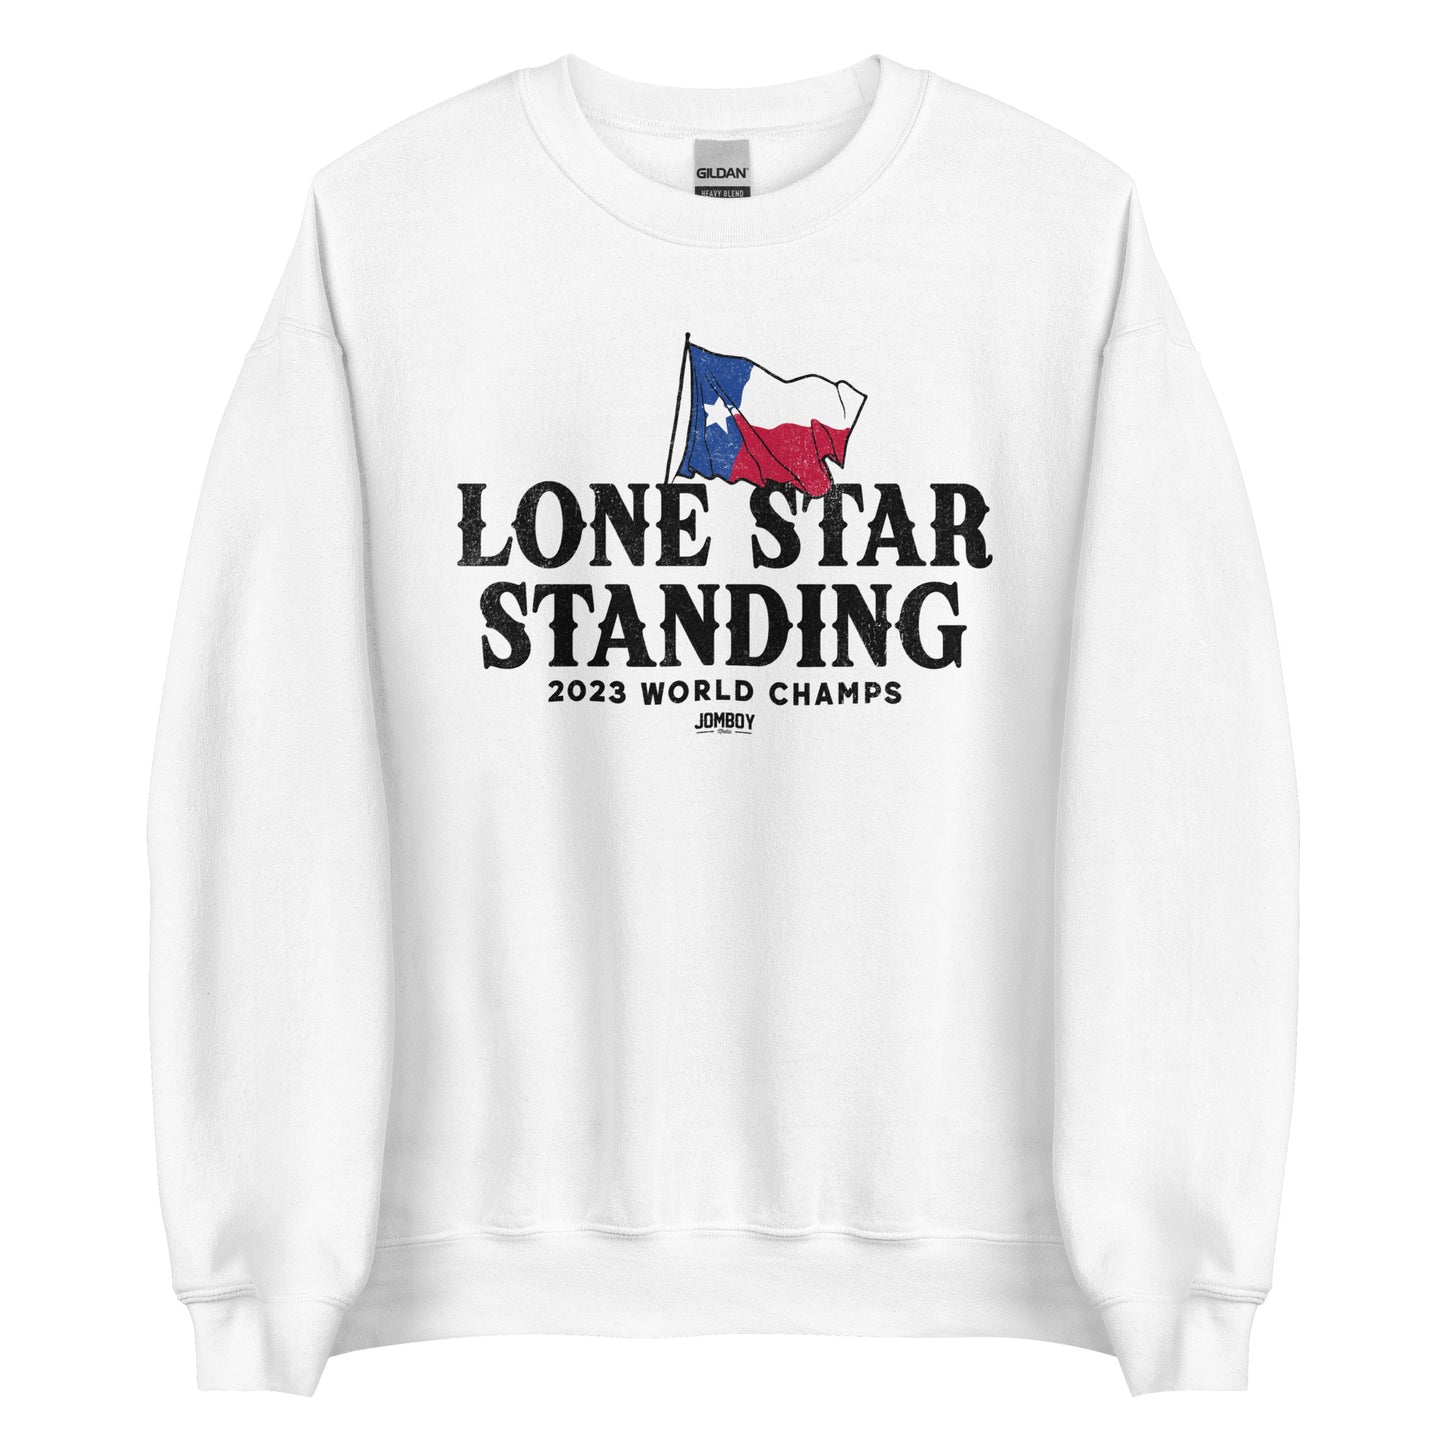 Lone Star Standing | Crewneck Sweatshirt